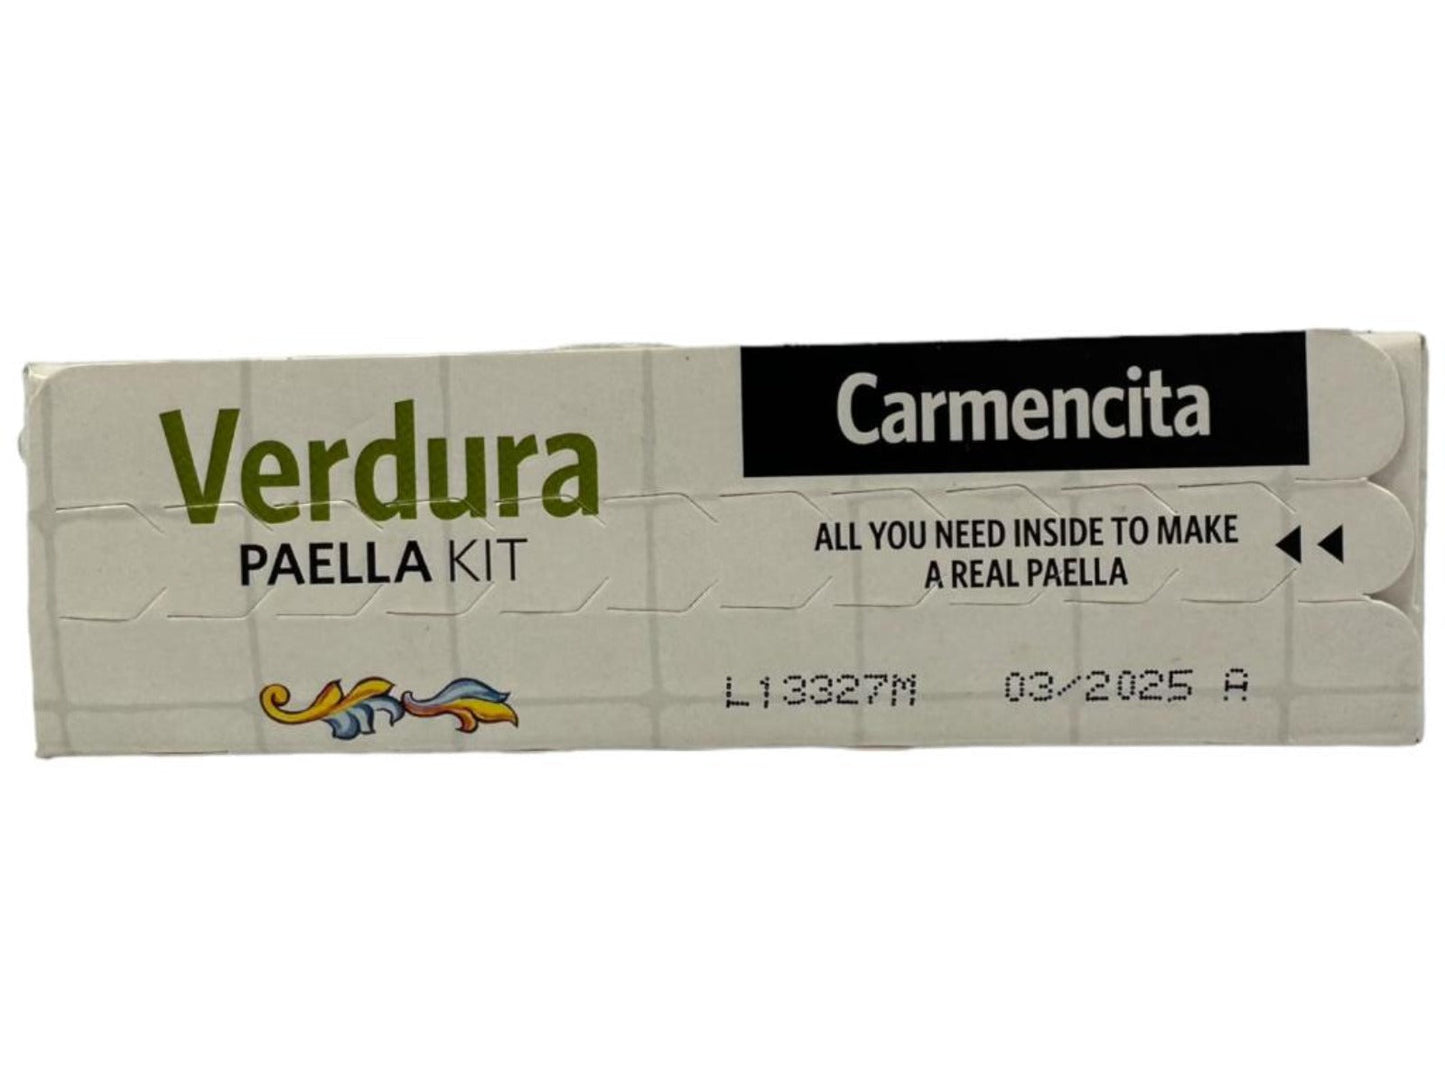 Carmencita Vegetable Paella Kit 256g with Dacsa RIce 1kg Multi Pack